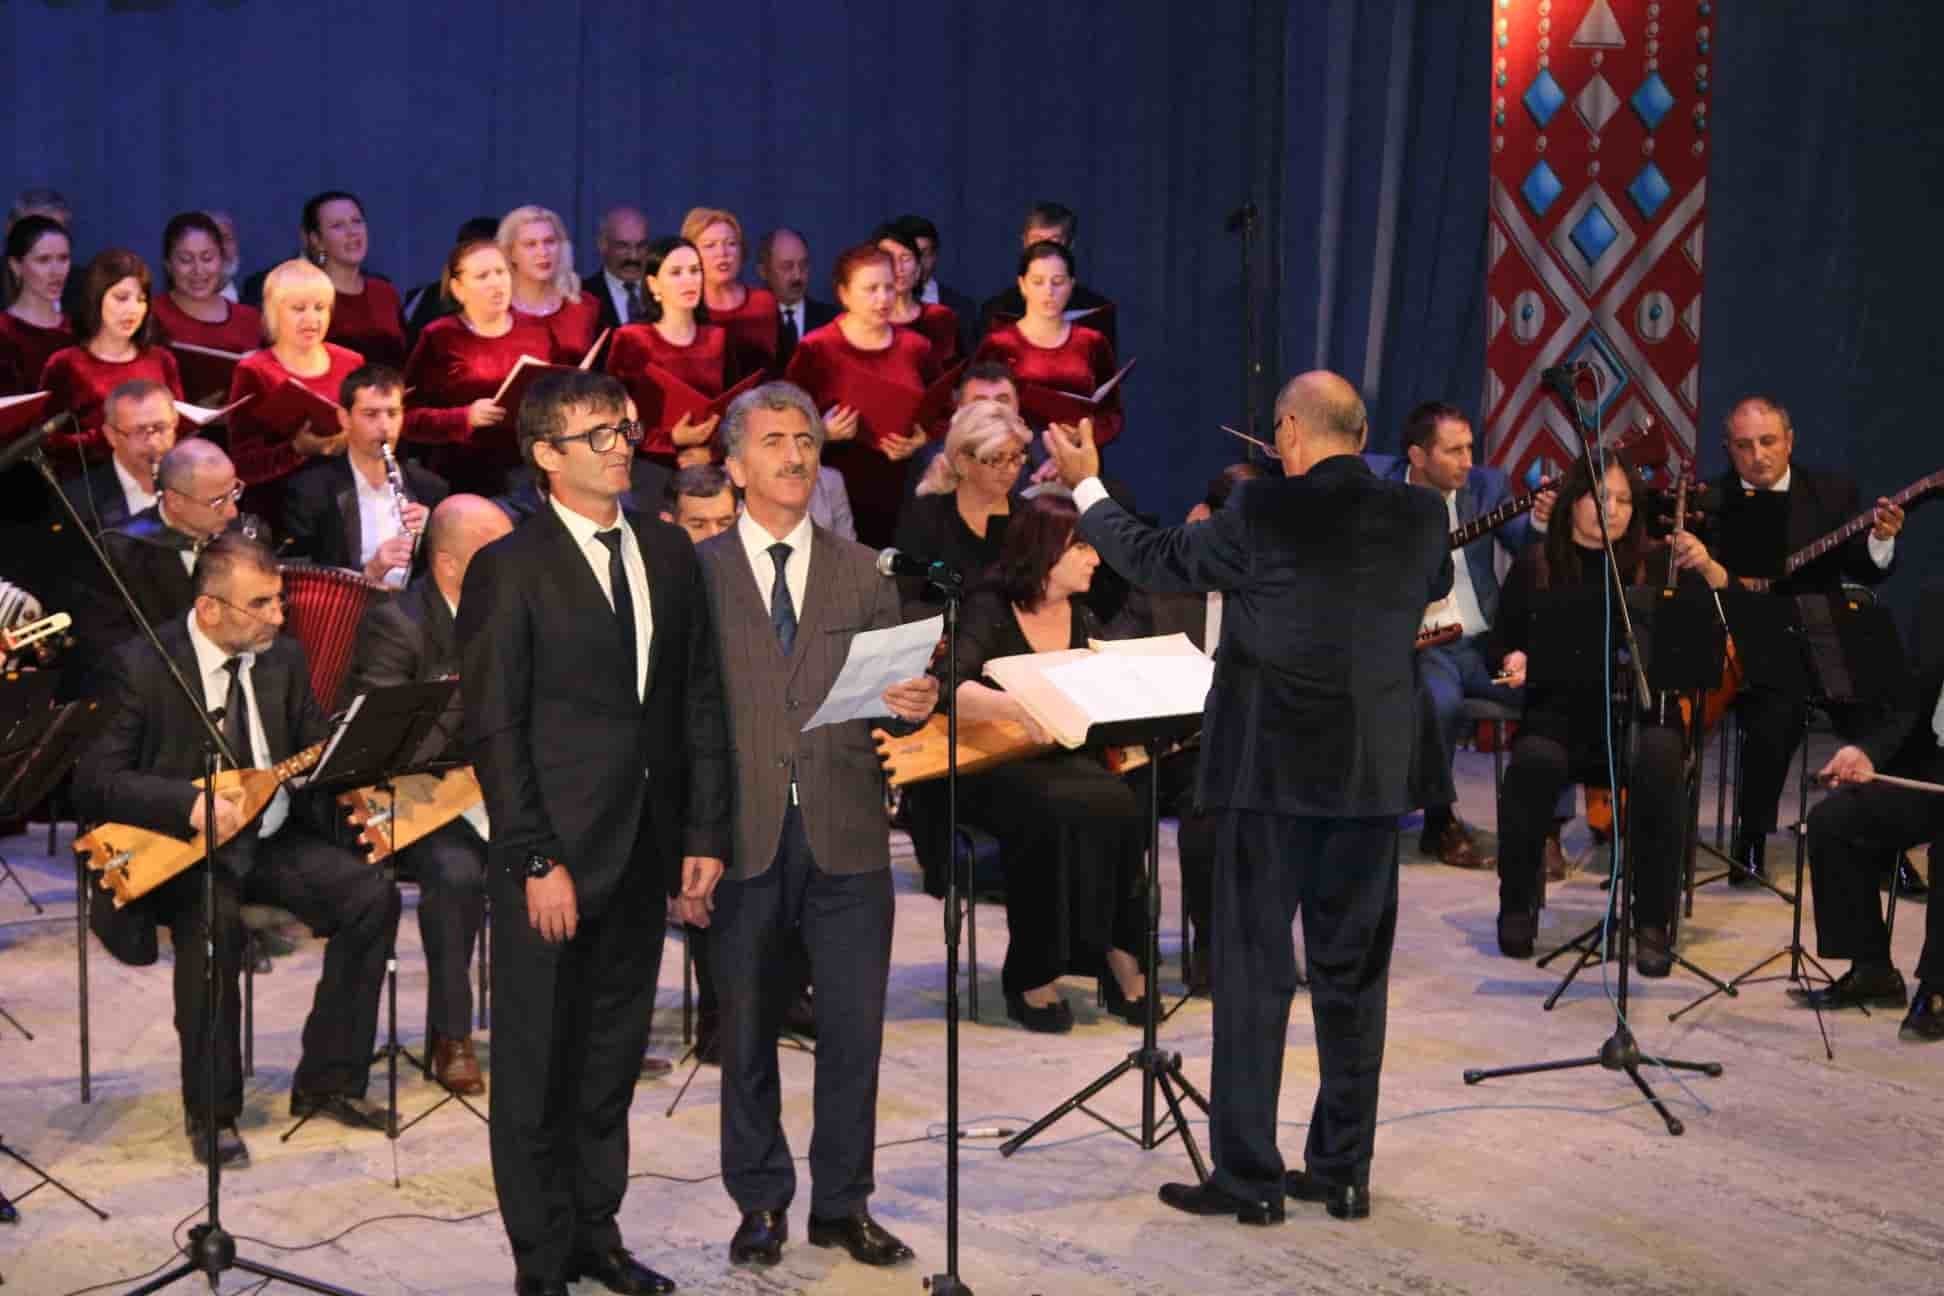 Юбилей Союза музыкантов Дагестана